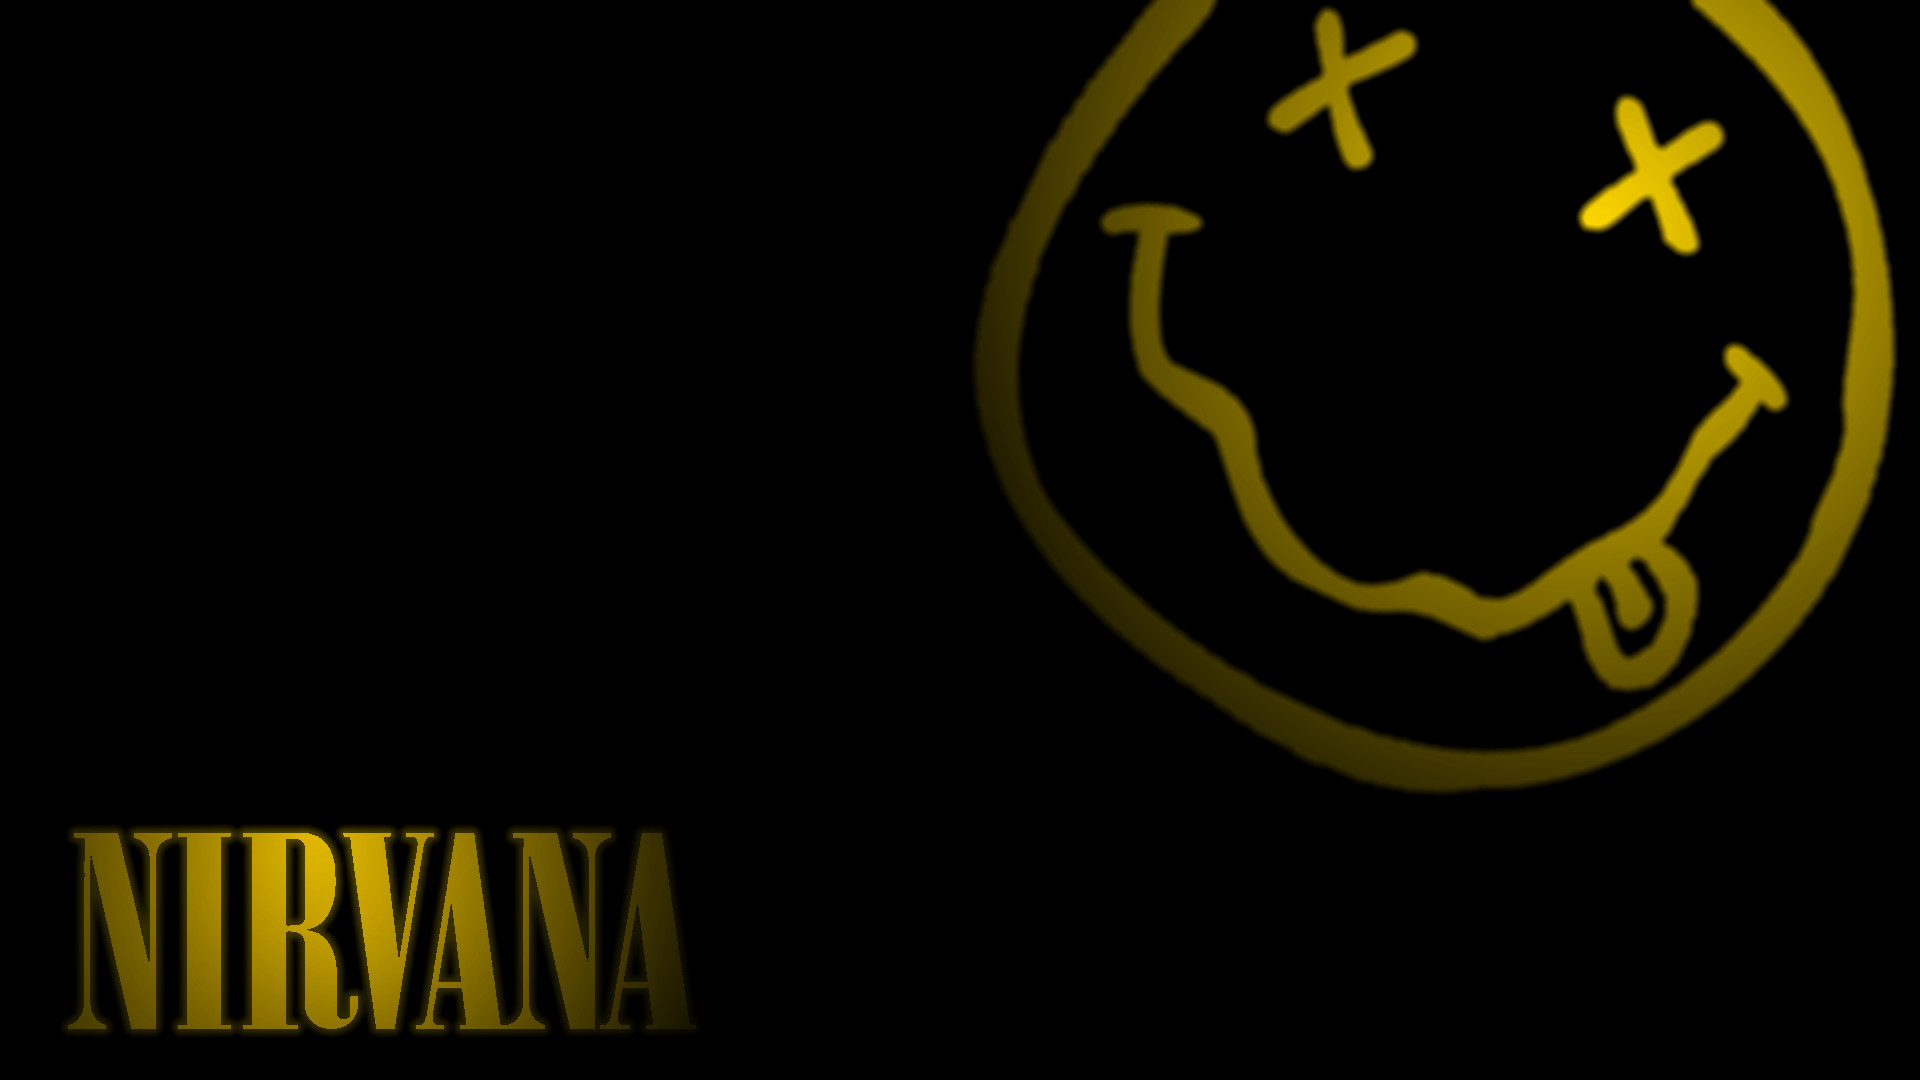 1920x1080 Nirvana Wallpaper Smiley Logo by TheJariZ on DeviantArt